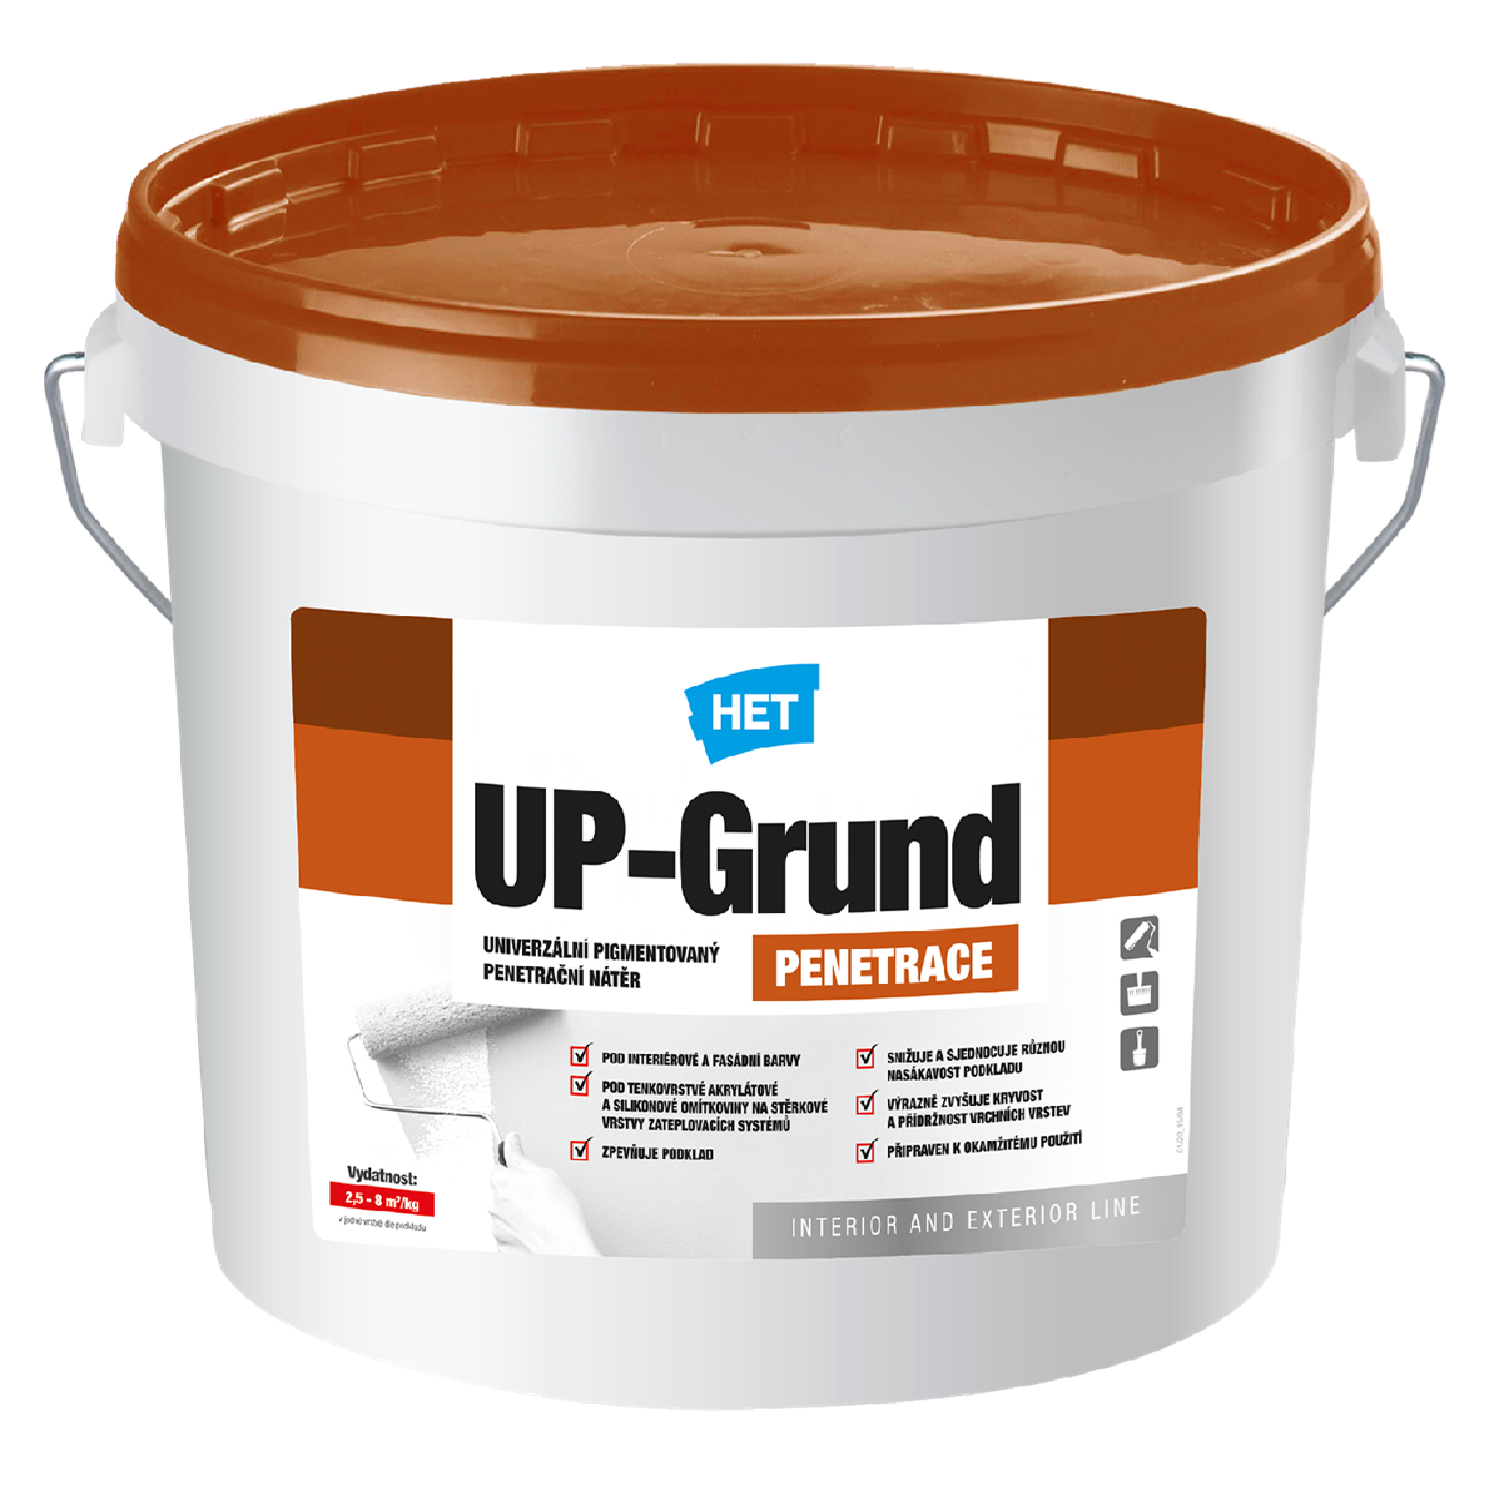 HET UP-Grund univerzálny pigmentovaný penetračný náter 1 kg